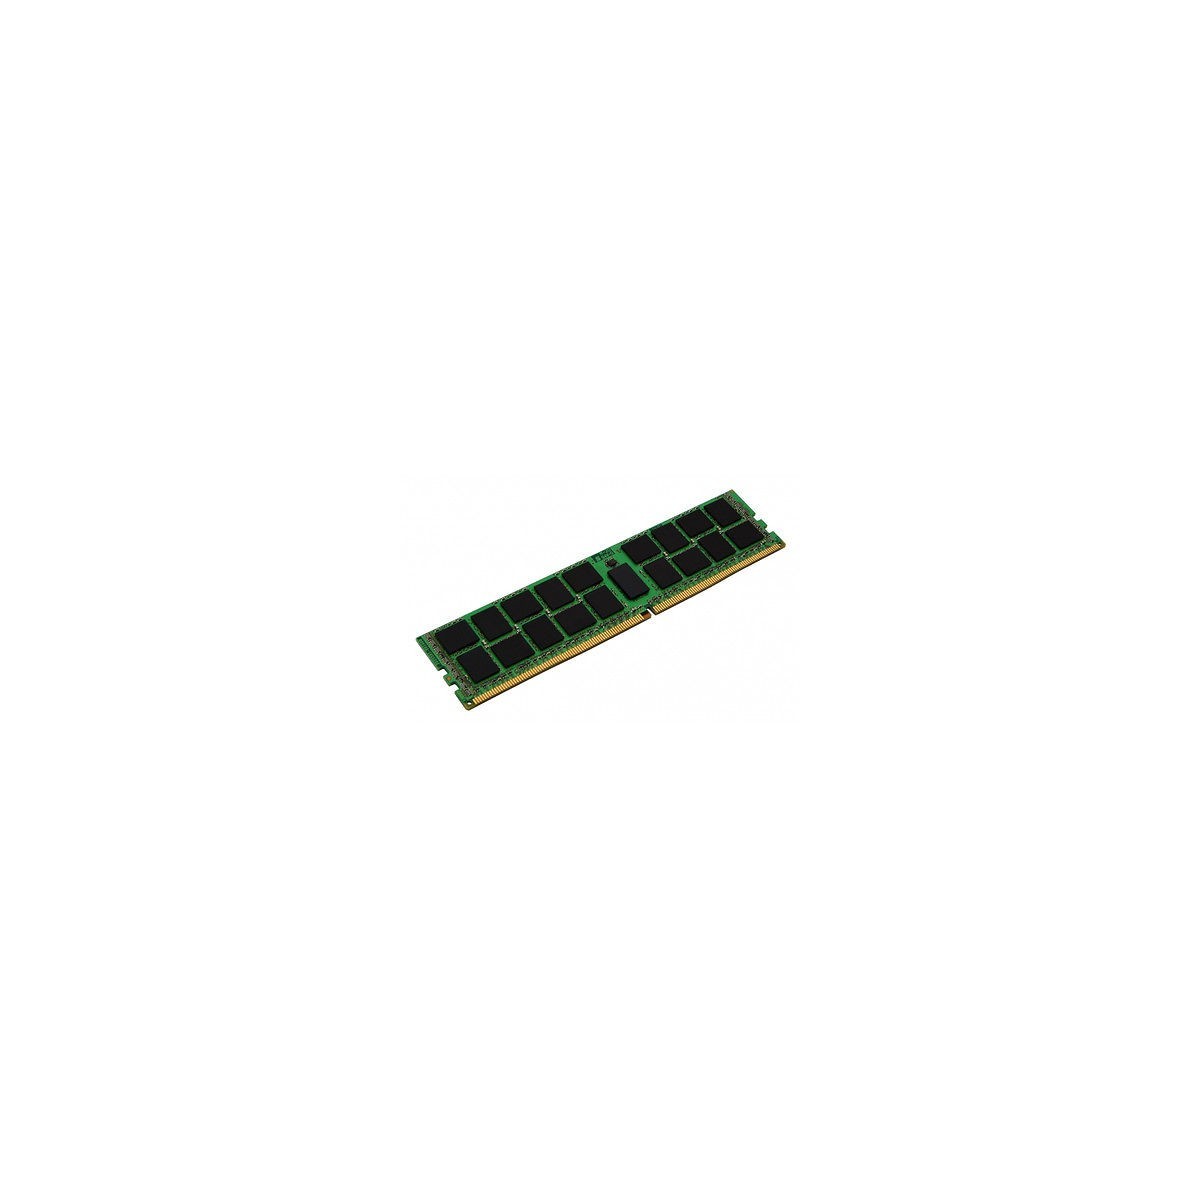 Kingston System Specific Memory 16GB DDR4 2400MHz - 16 GB - 1 x 16 GB - DDR4 - 2400 MHz - 288-pin DIMM - Green